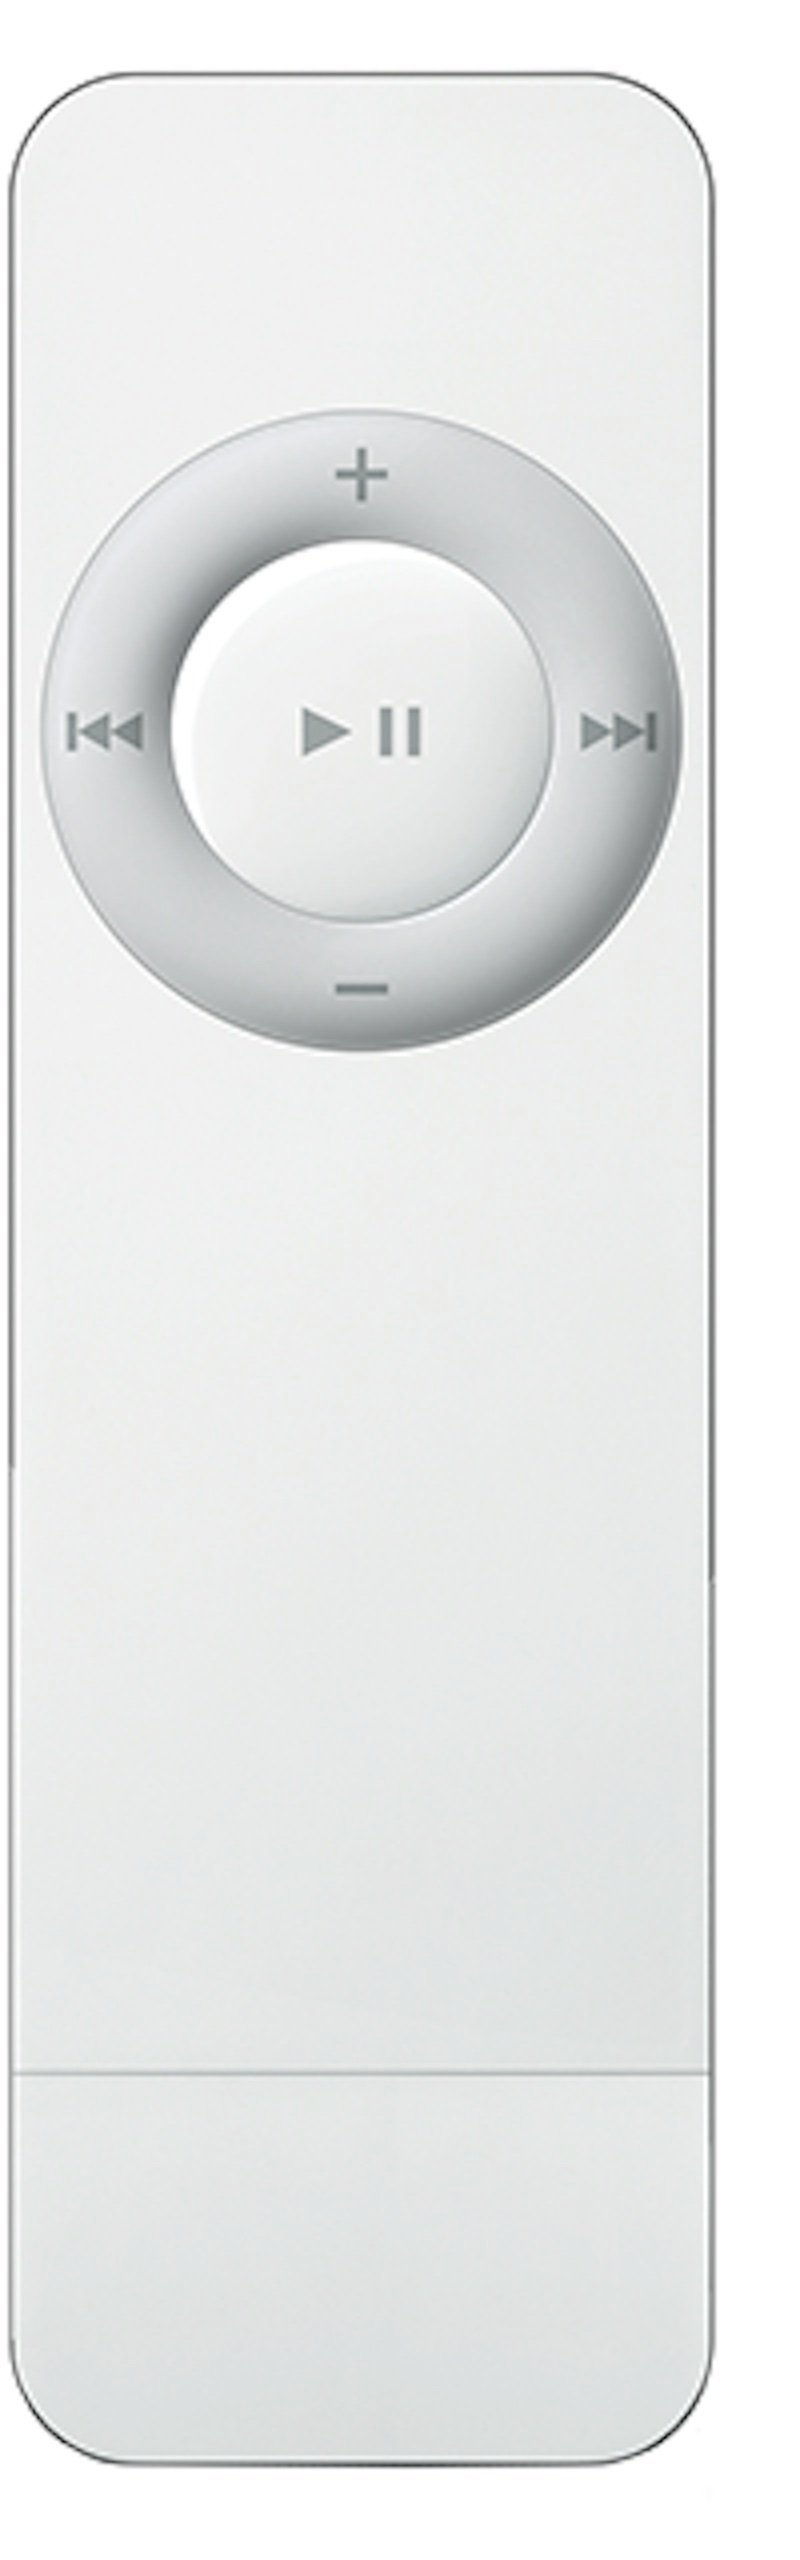 iPod Shuffle 1 1Gb